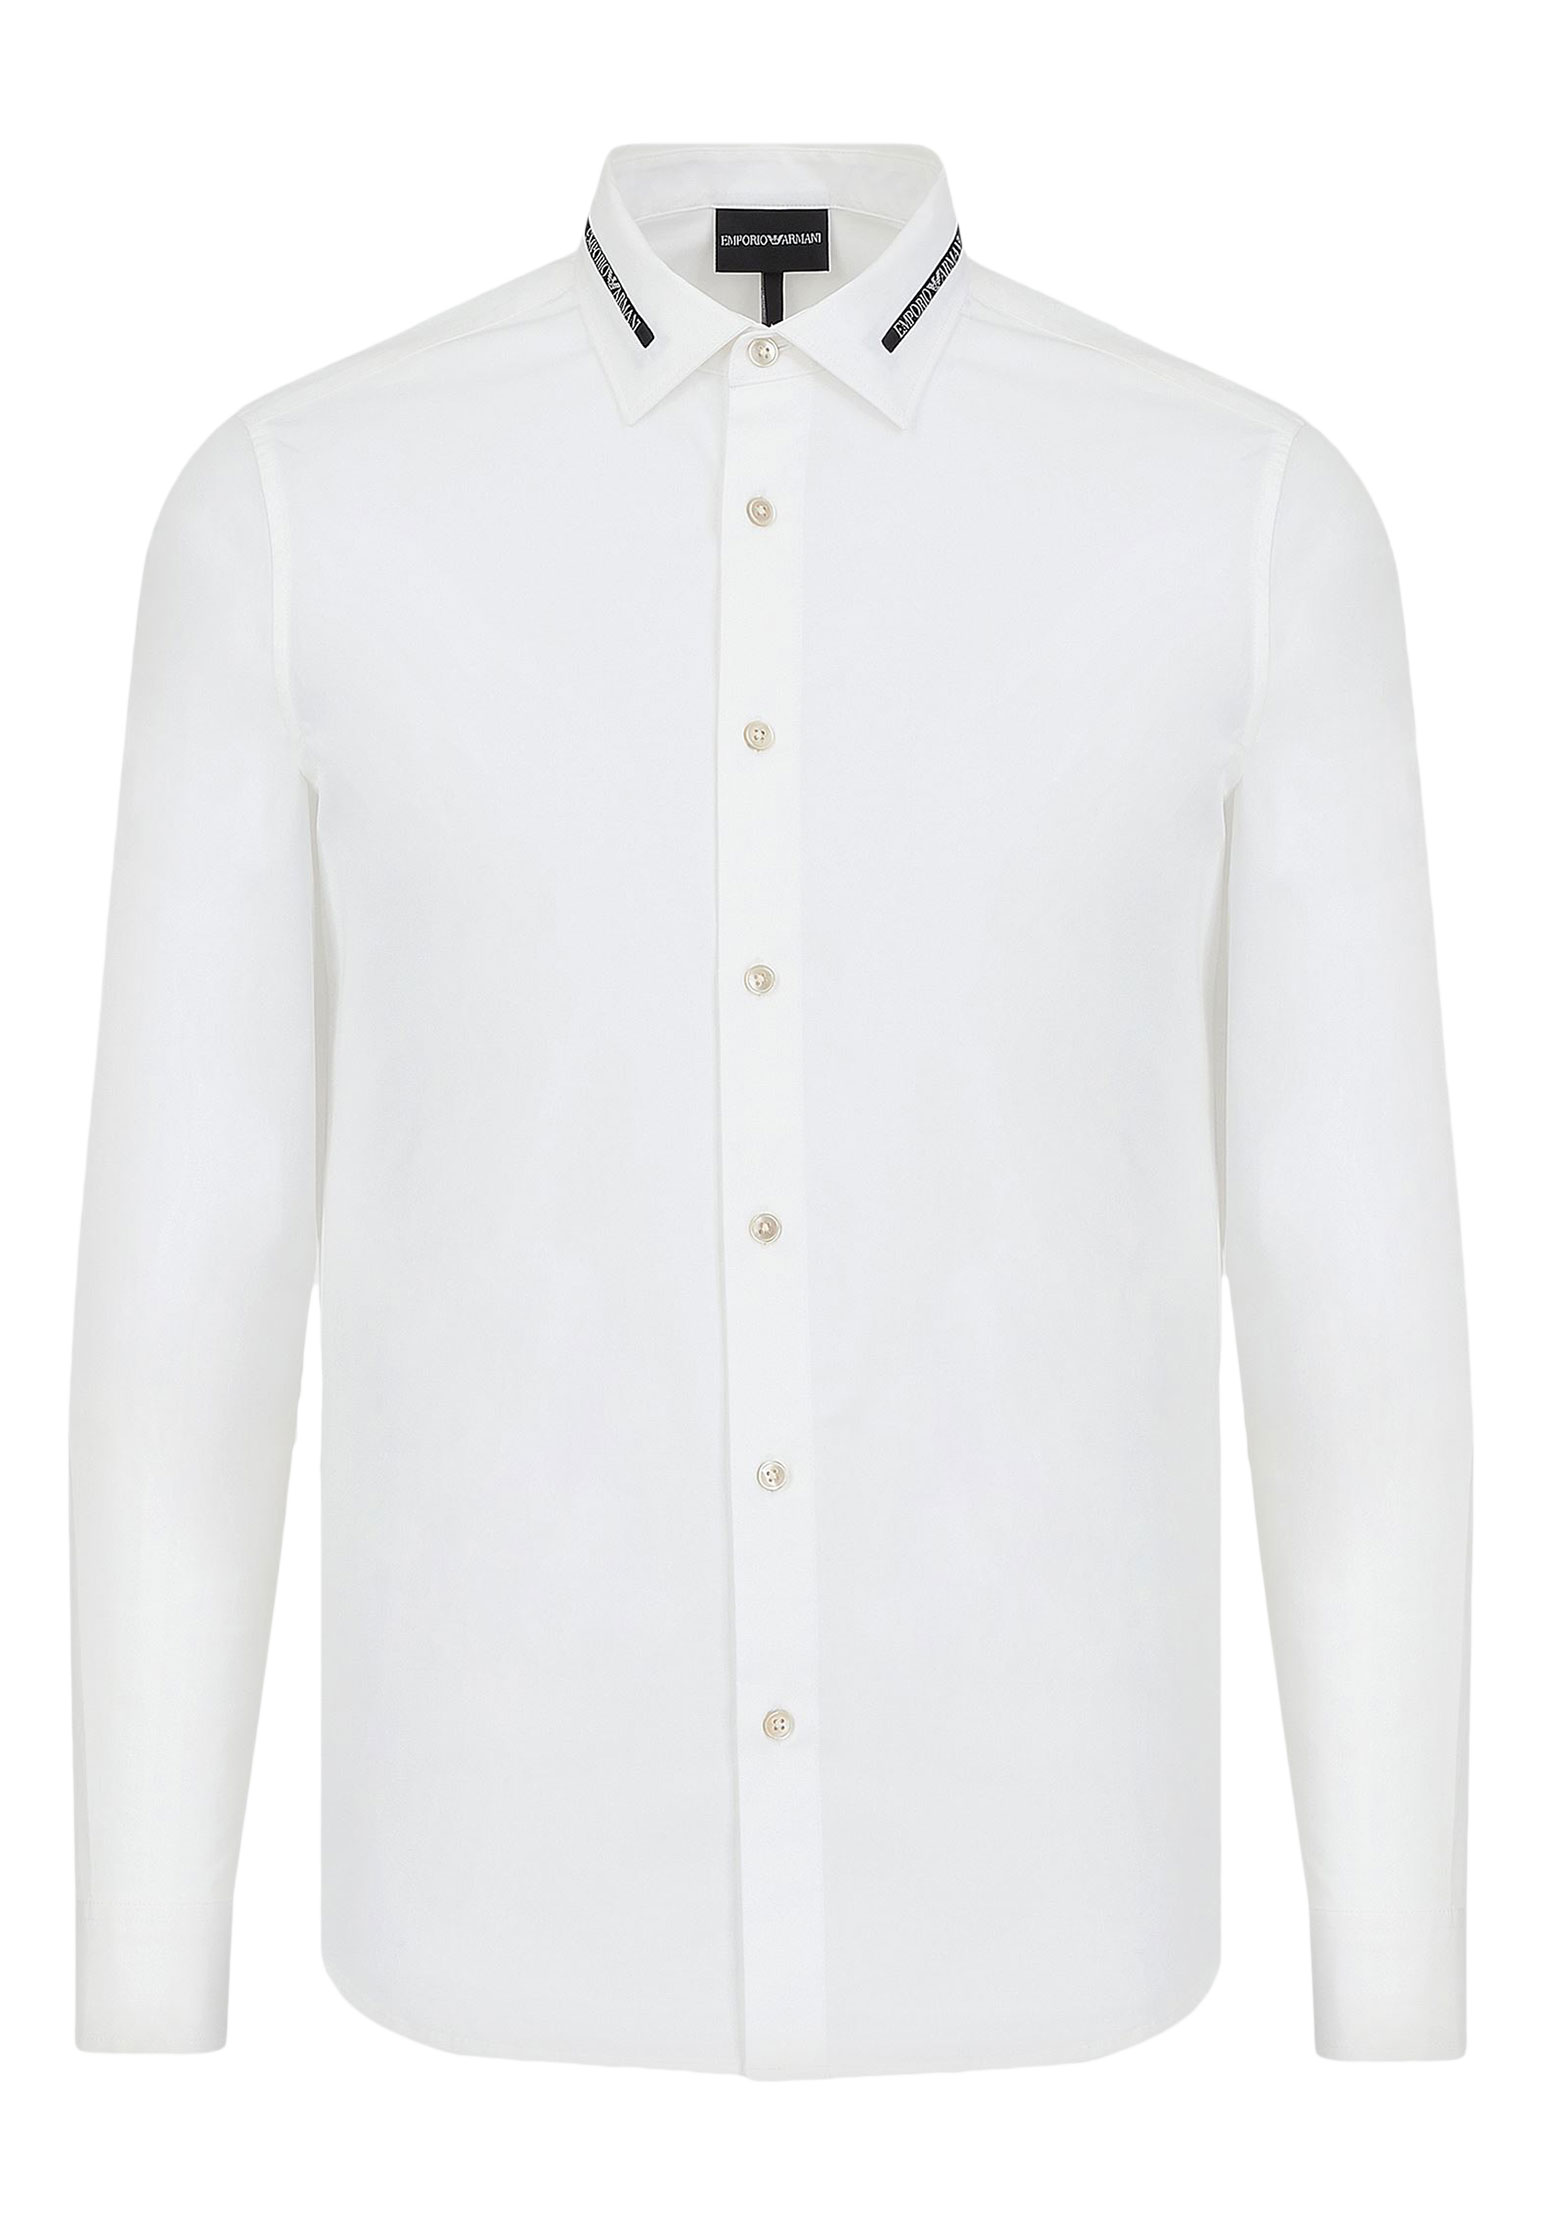 Рубашка мужская Emporio Armani 134481 белая S